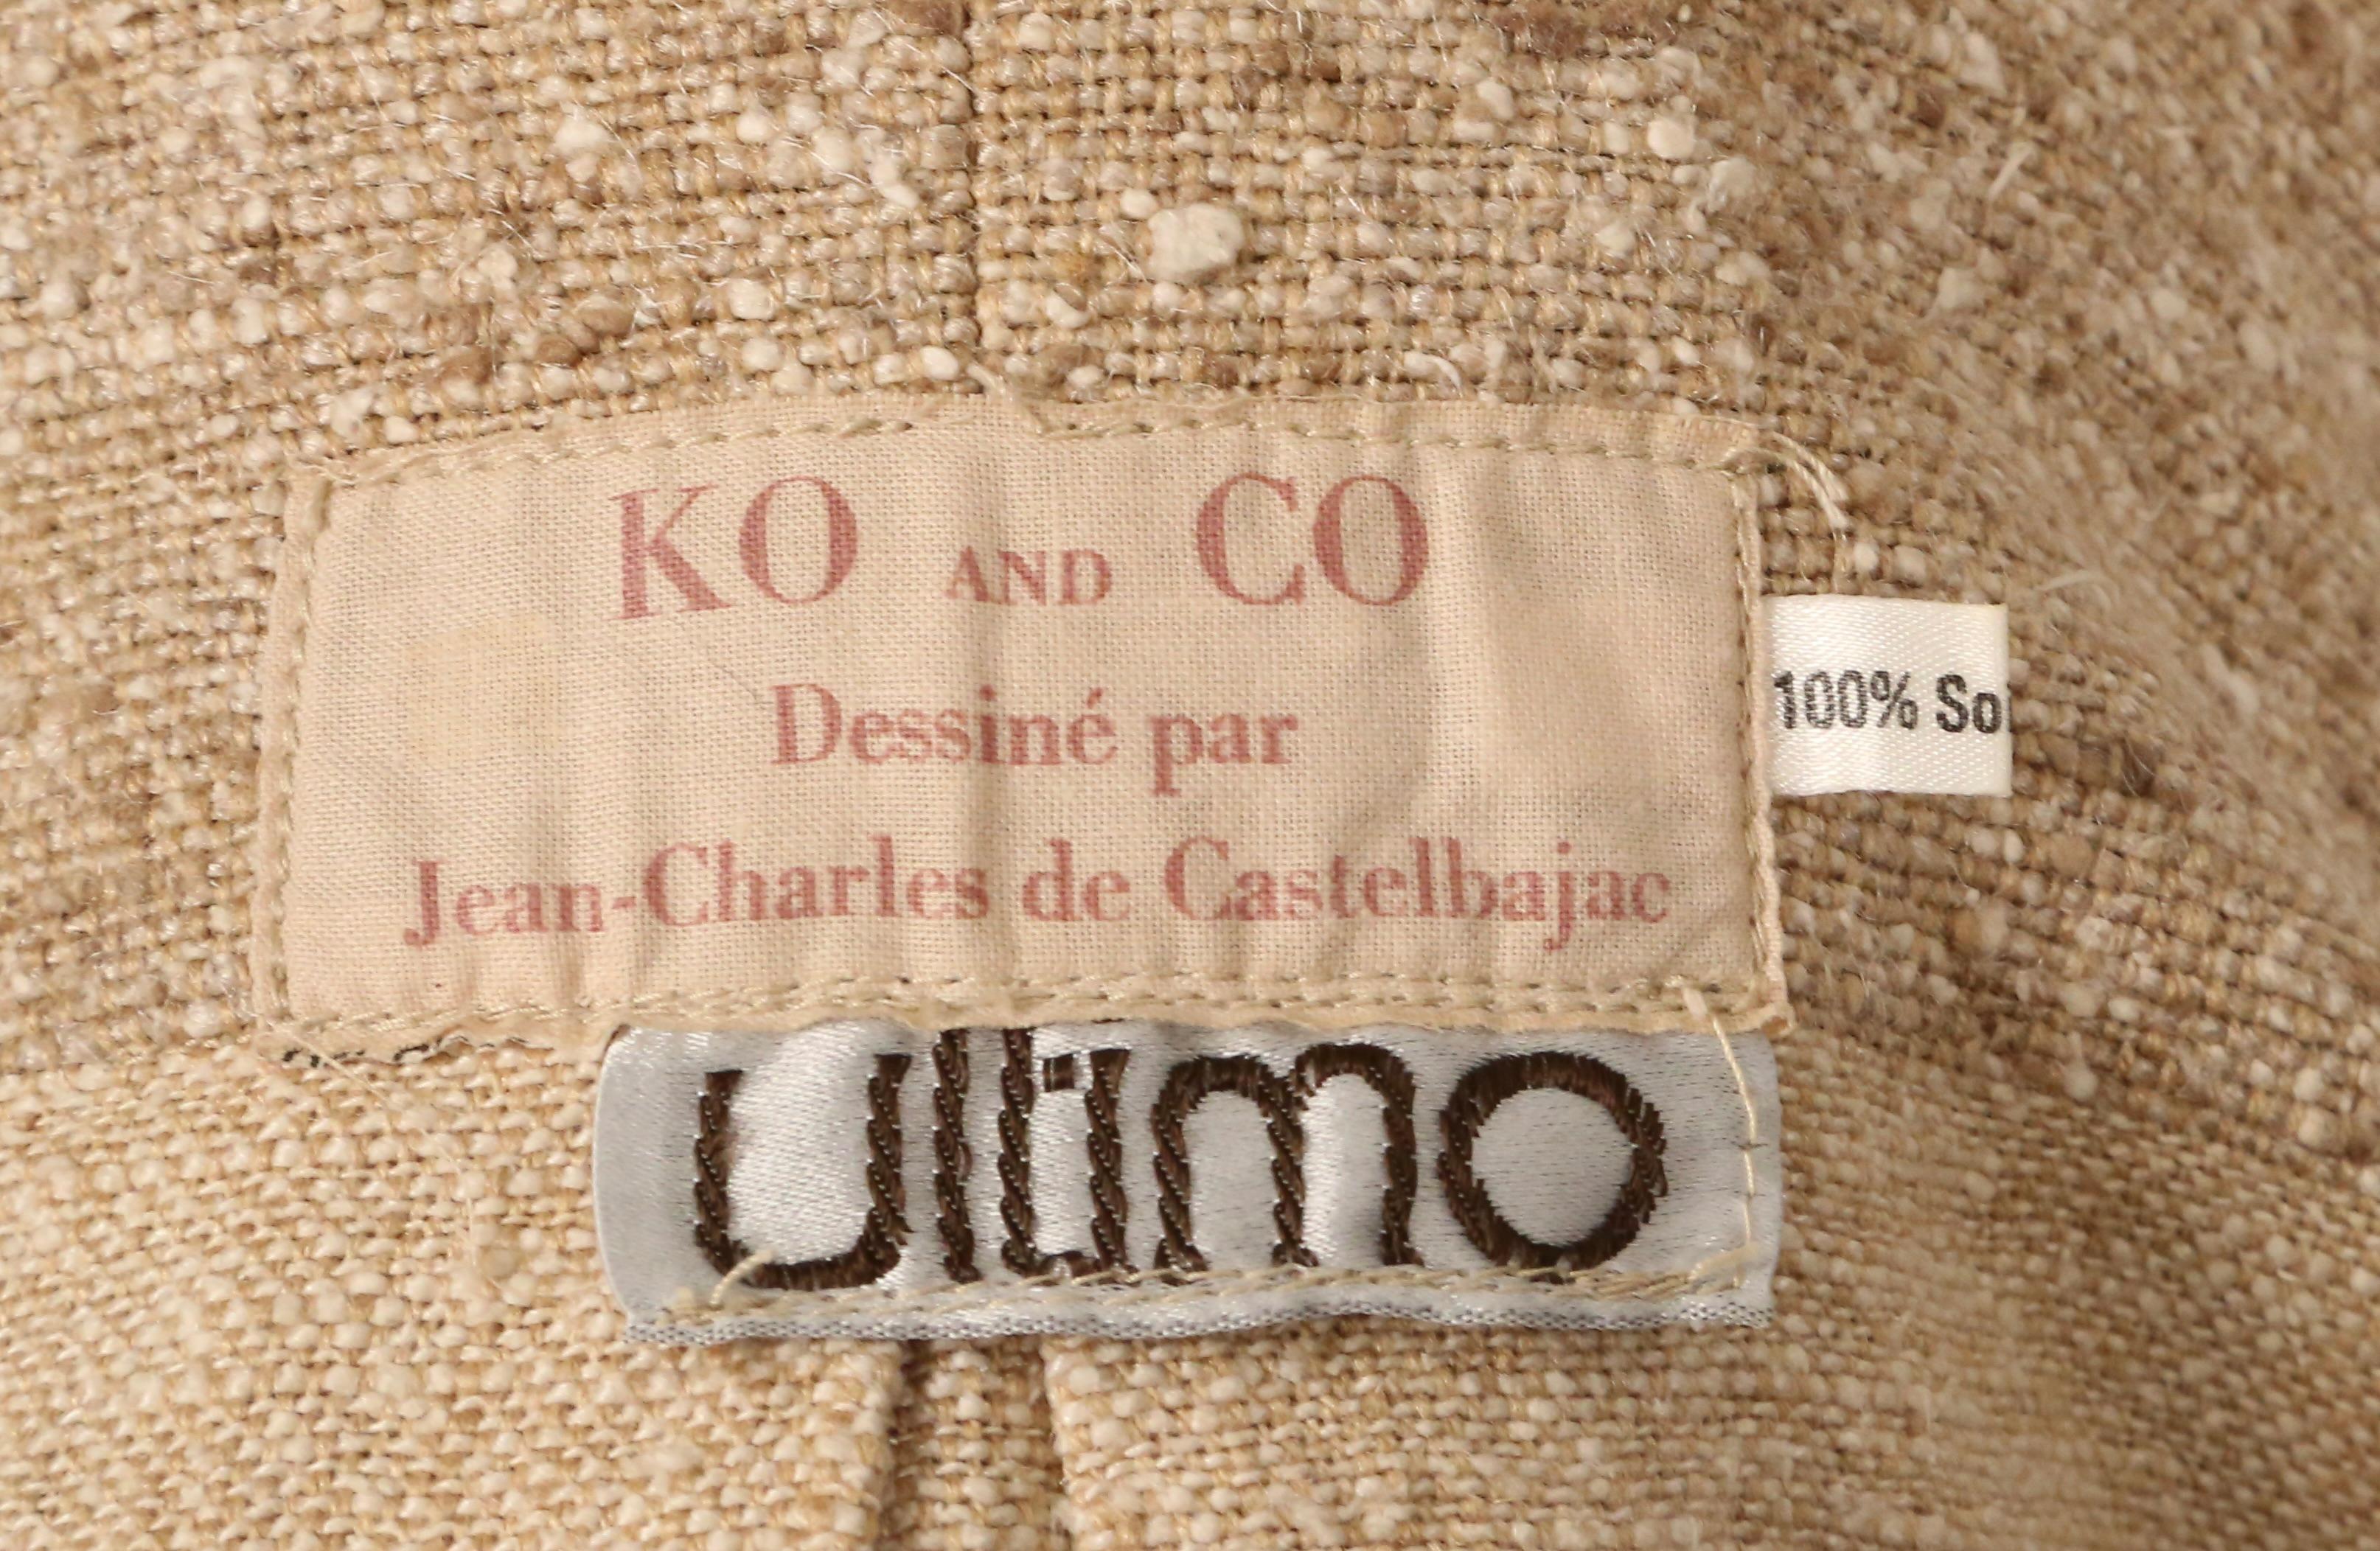 1970's KO and CO Dessiné par JEAN CHARLES de CASTELBAJAC raw silk striped jacket For Sale 4